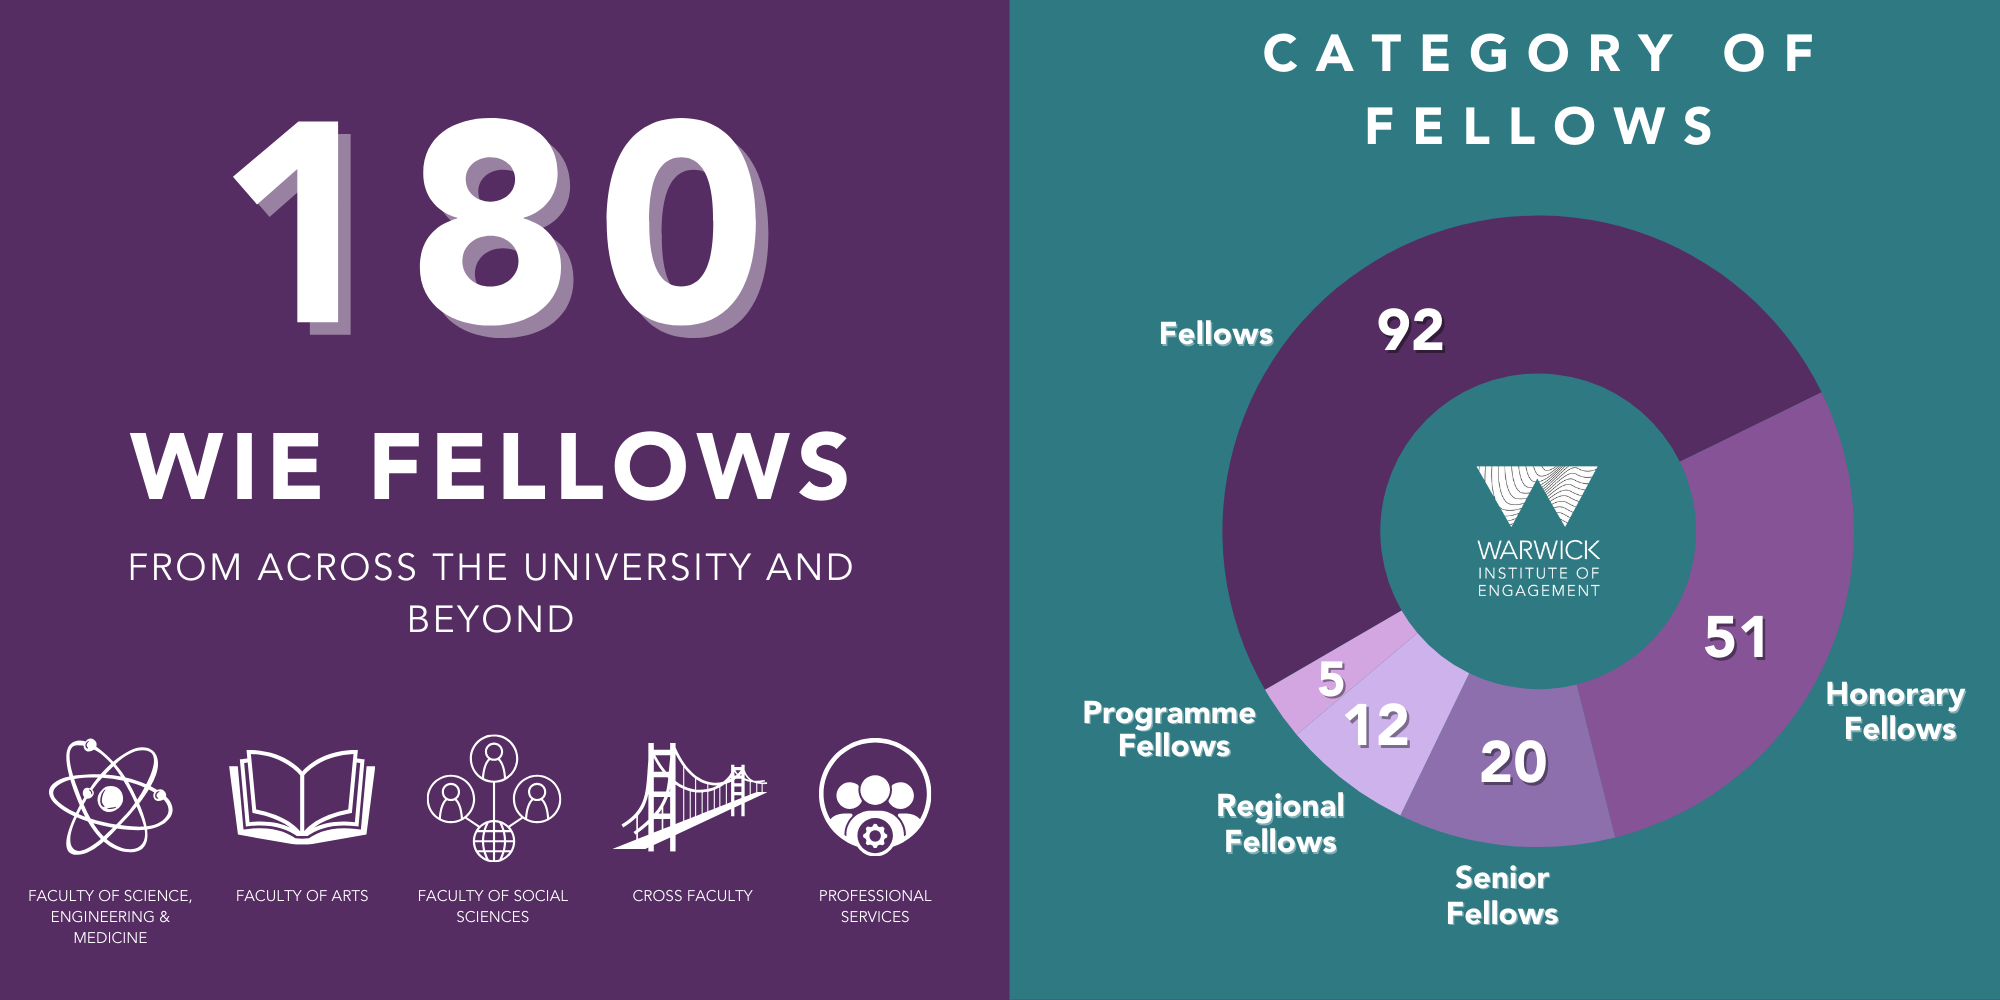 180 fellows from across the university and beyond. 92 fellows, 51 Honorary Fellows, 20 Senior Fellows, 12 Regional Fellows, 5 Programme Fellows